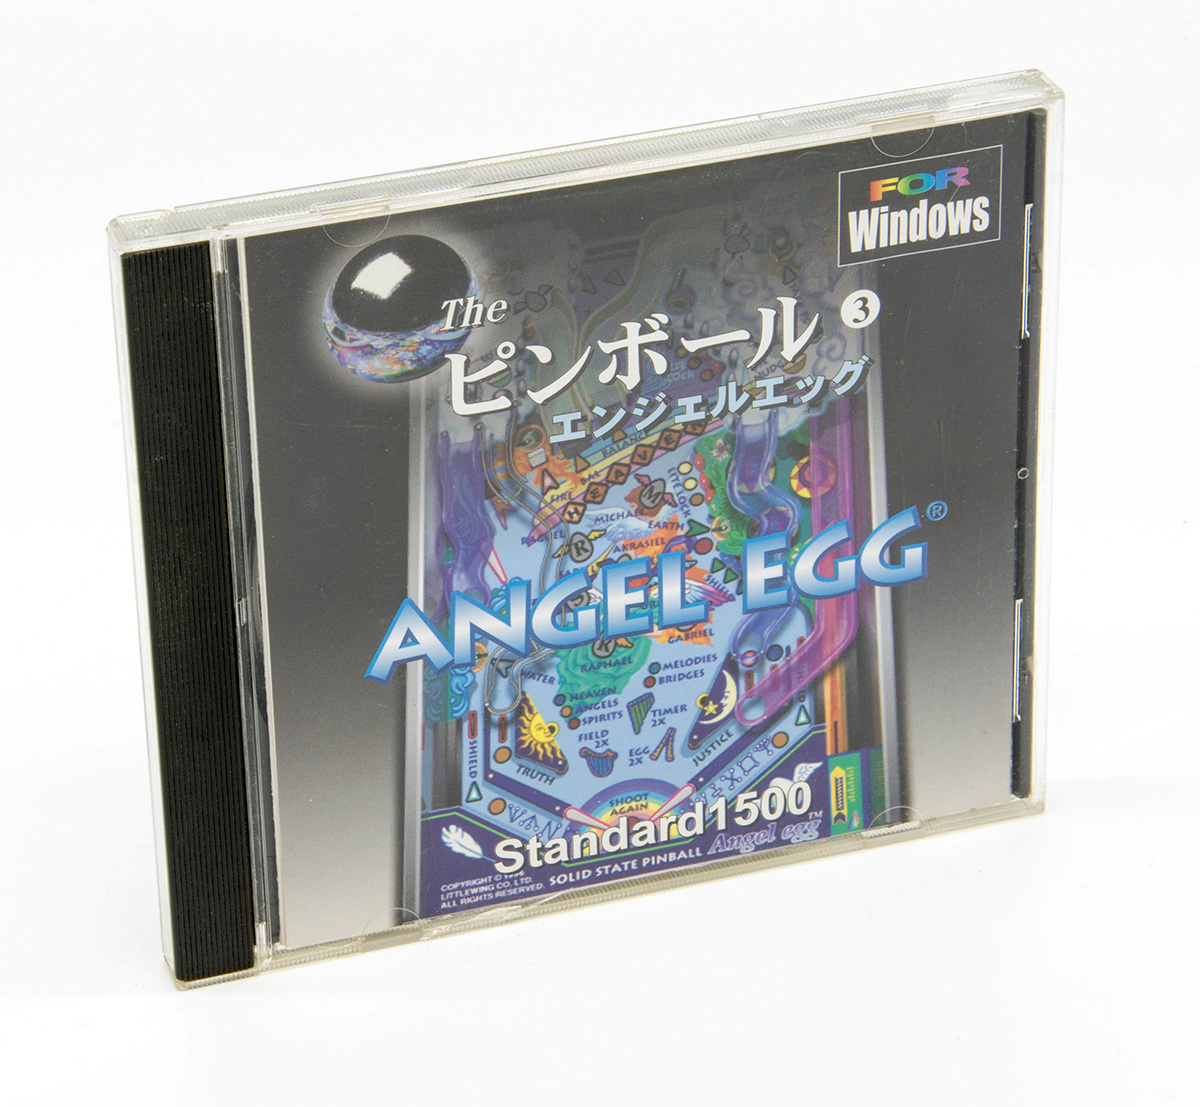 SUCCESS Standard1500 The ピンボール3 ANGEL EGG Windows PC版 CD-ROM 中古_画像1